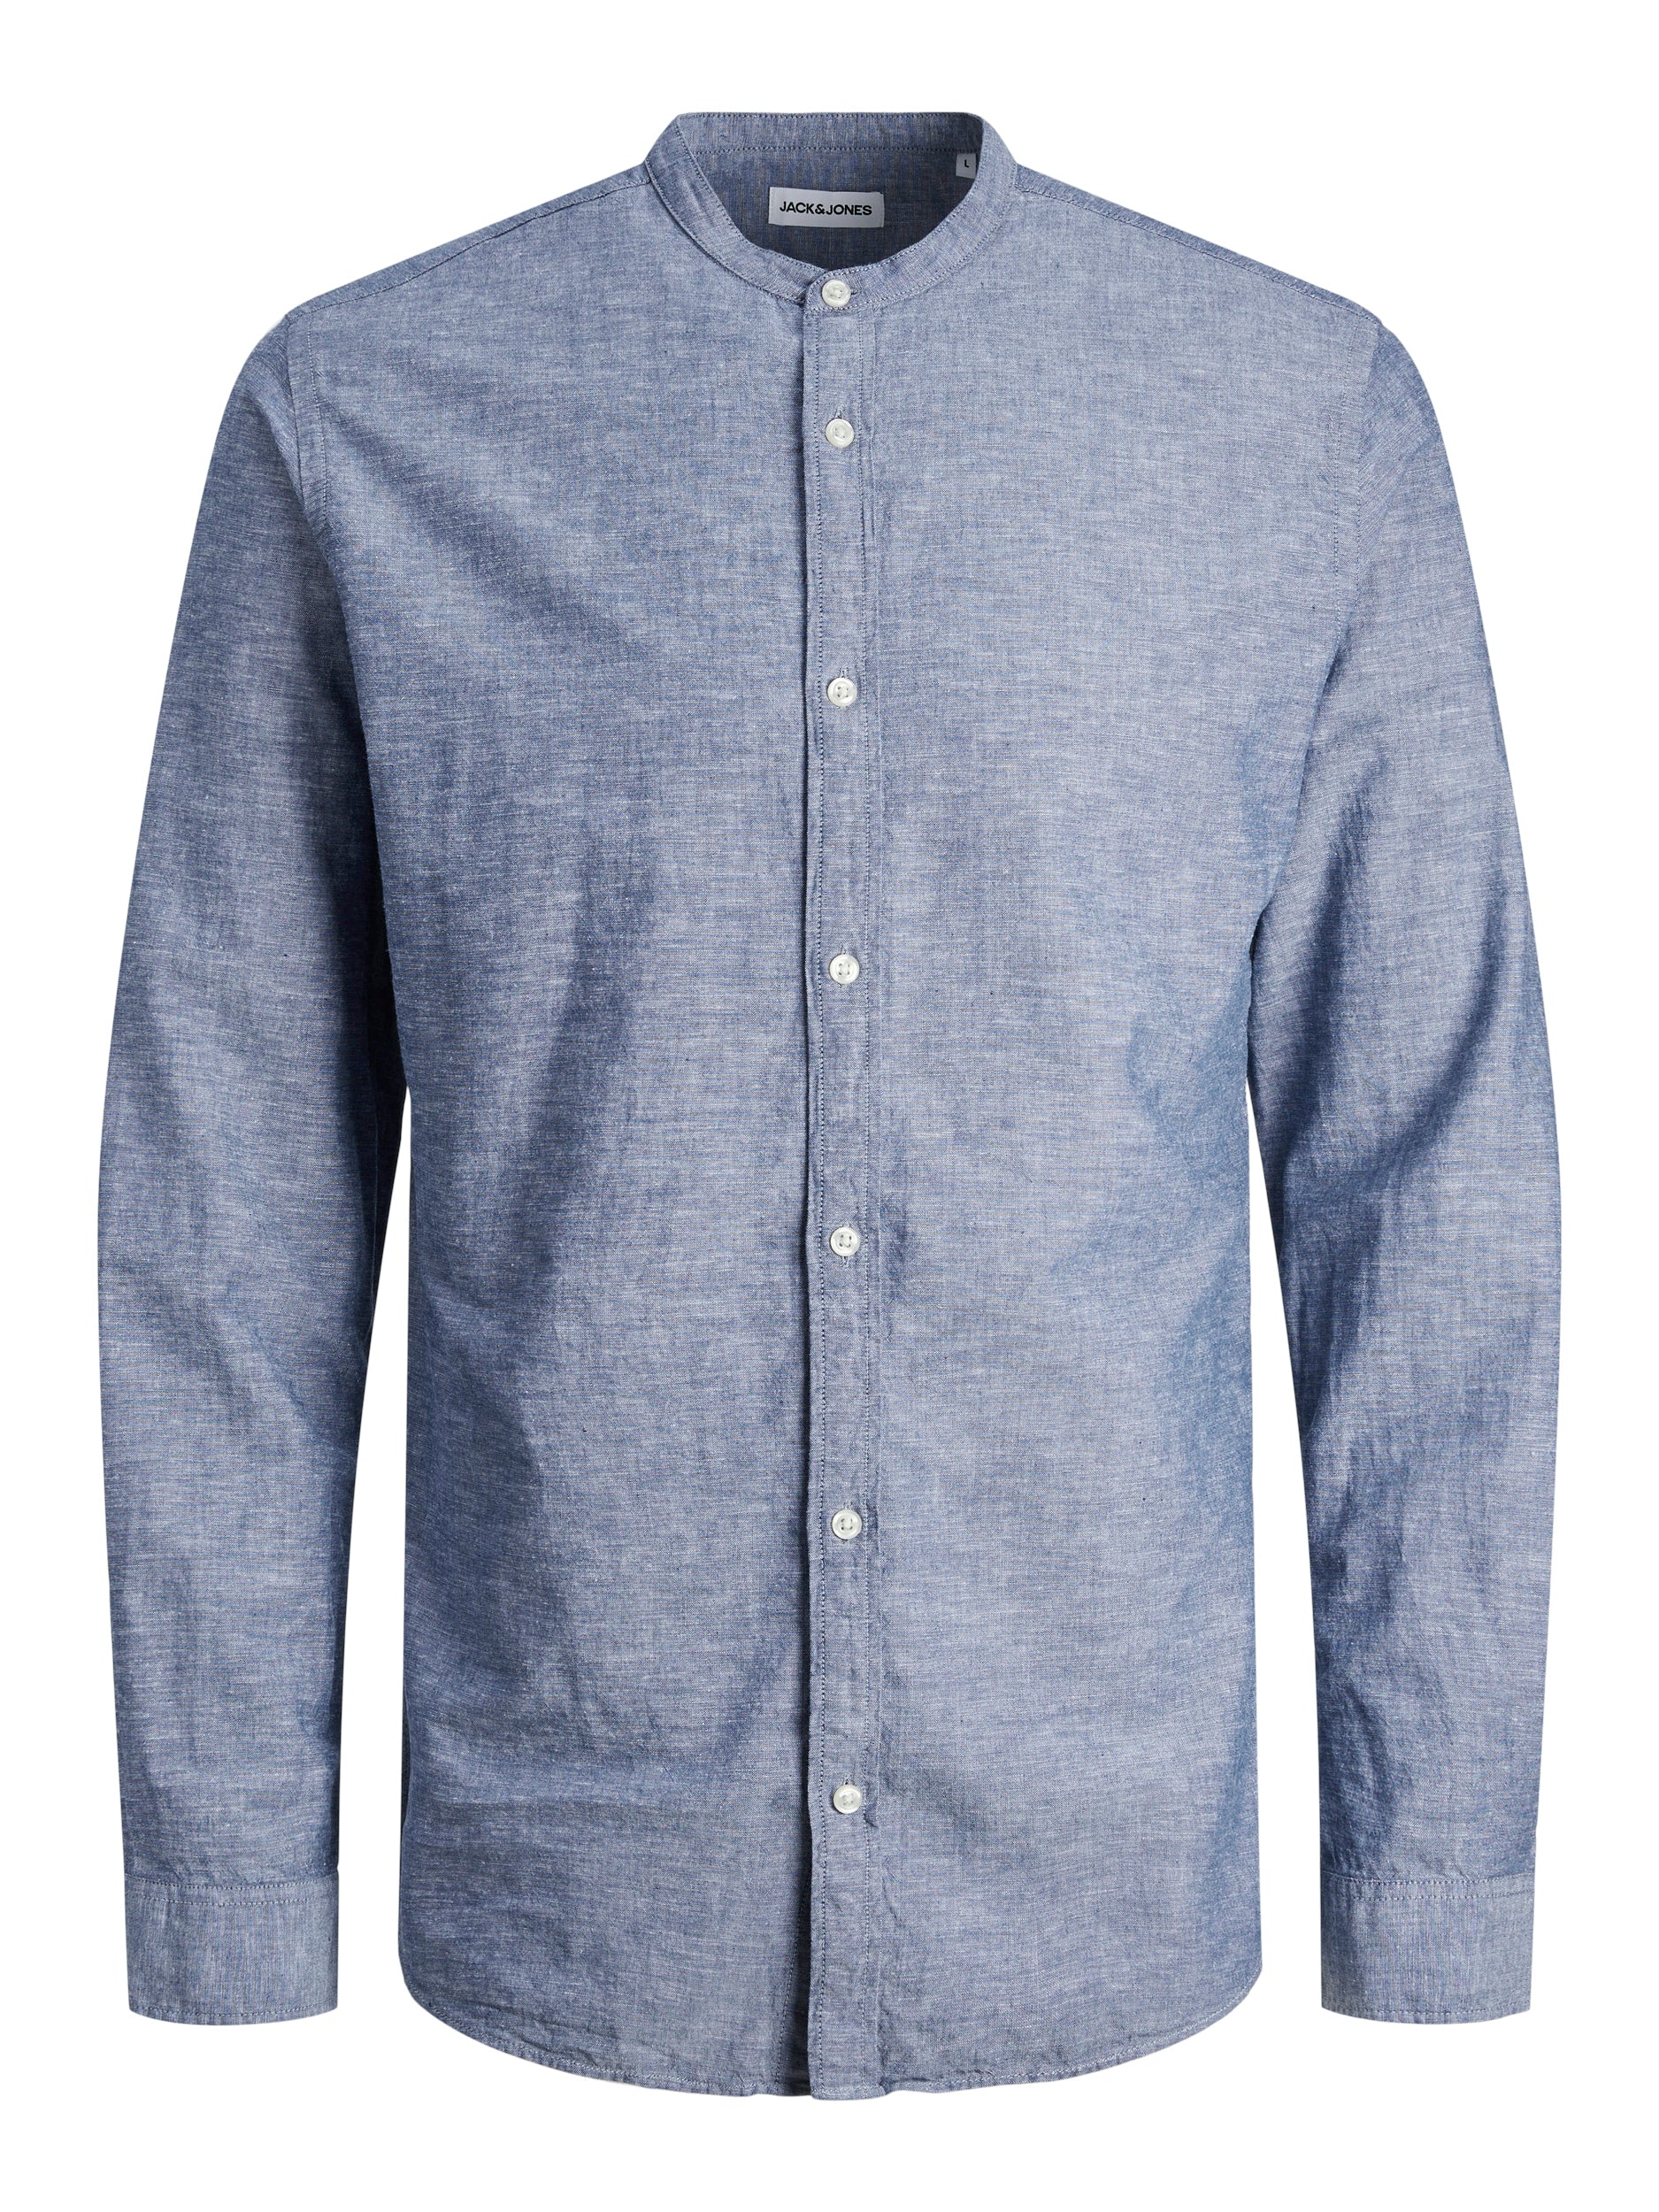 Men's Linen Band Shirt Long Sleeve-Faded Denim-Front View